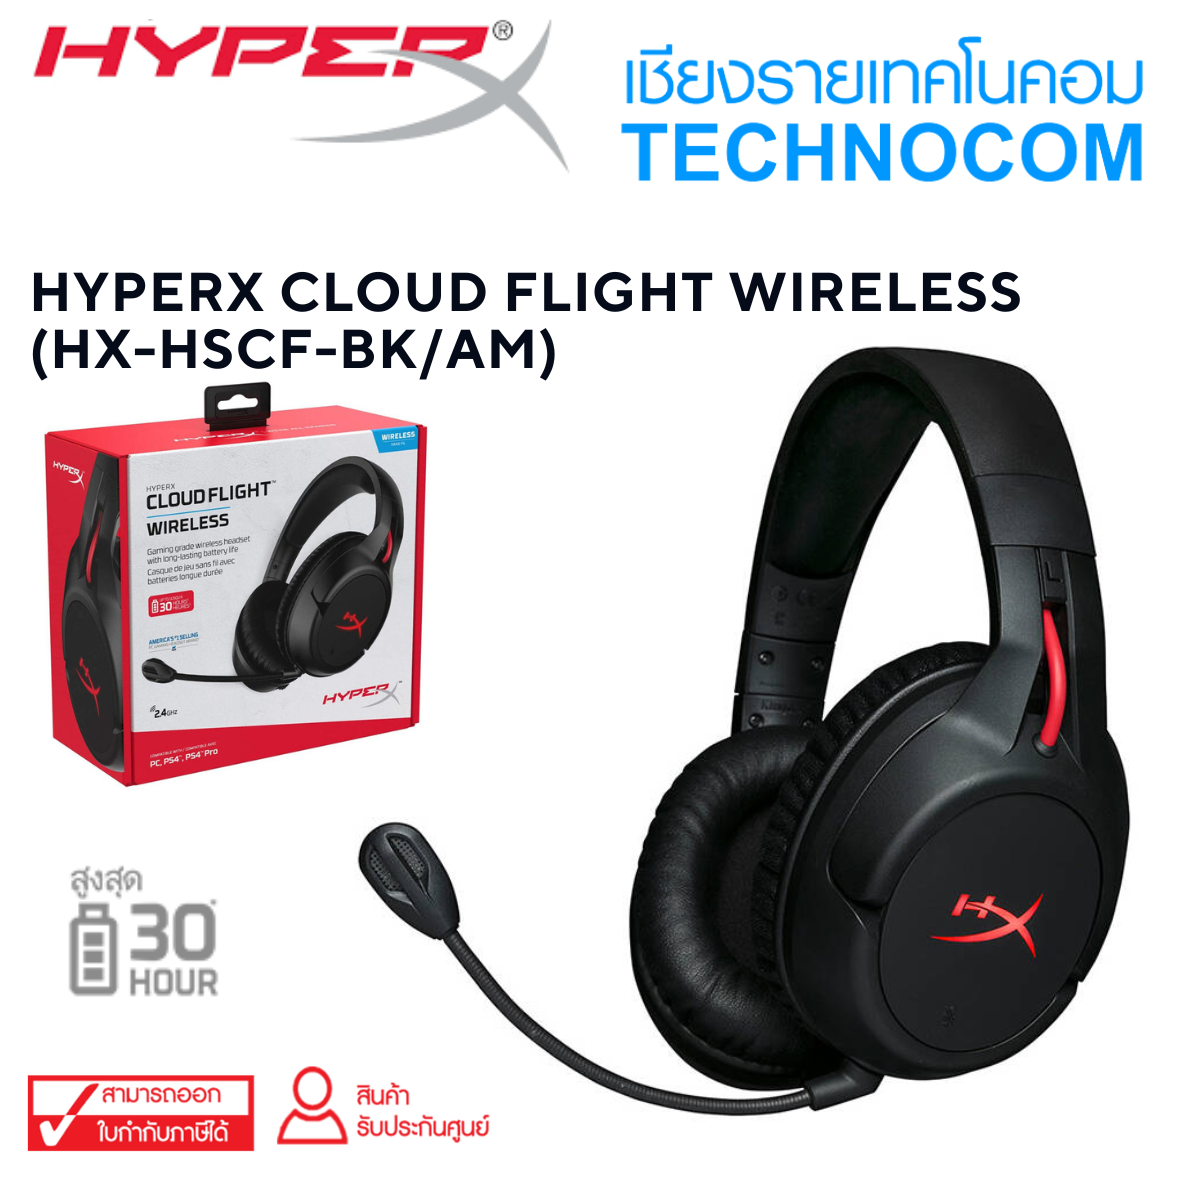 HYPERX CLOUD FLIGHT WIRELESS (HX-HSCF-BK/AM)